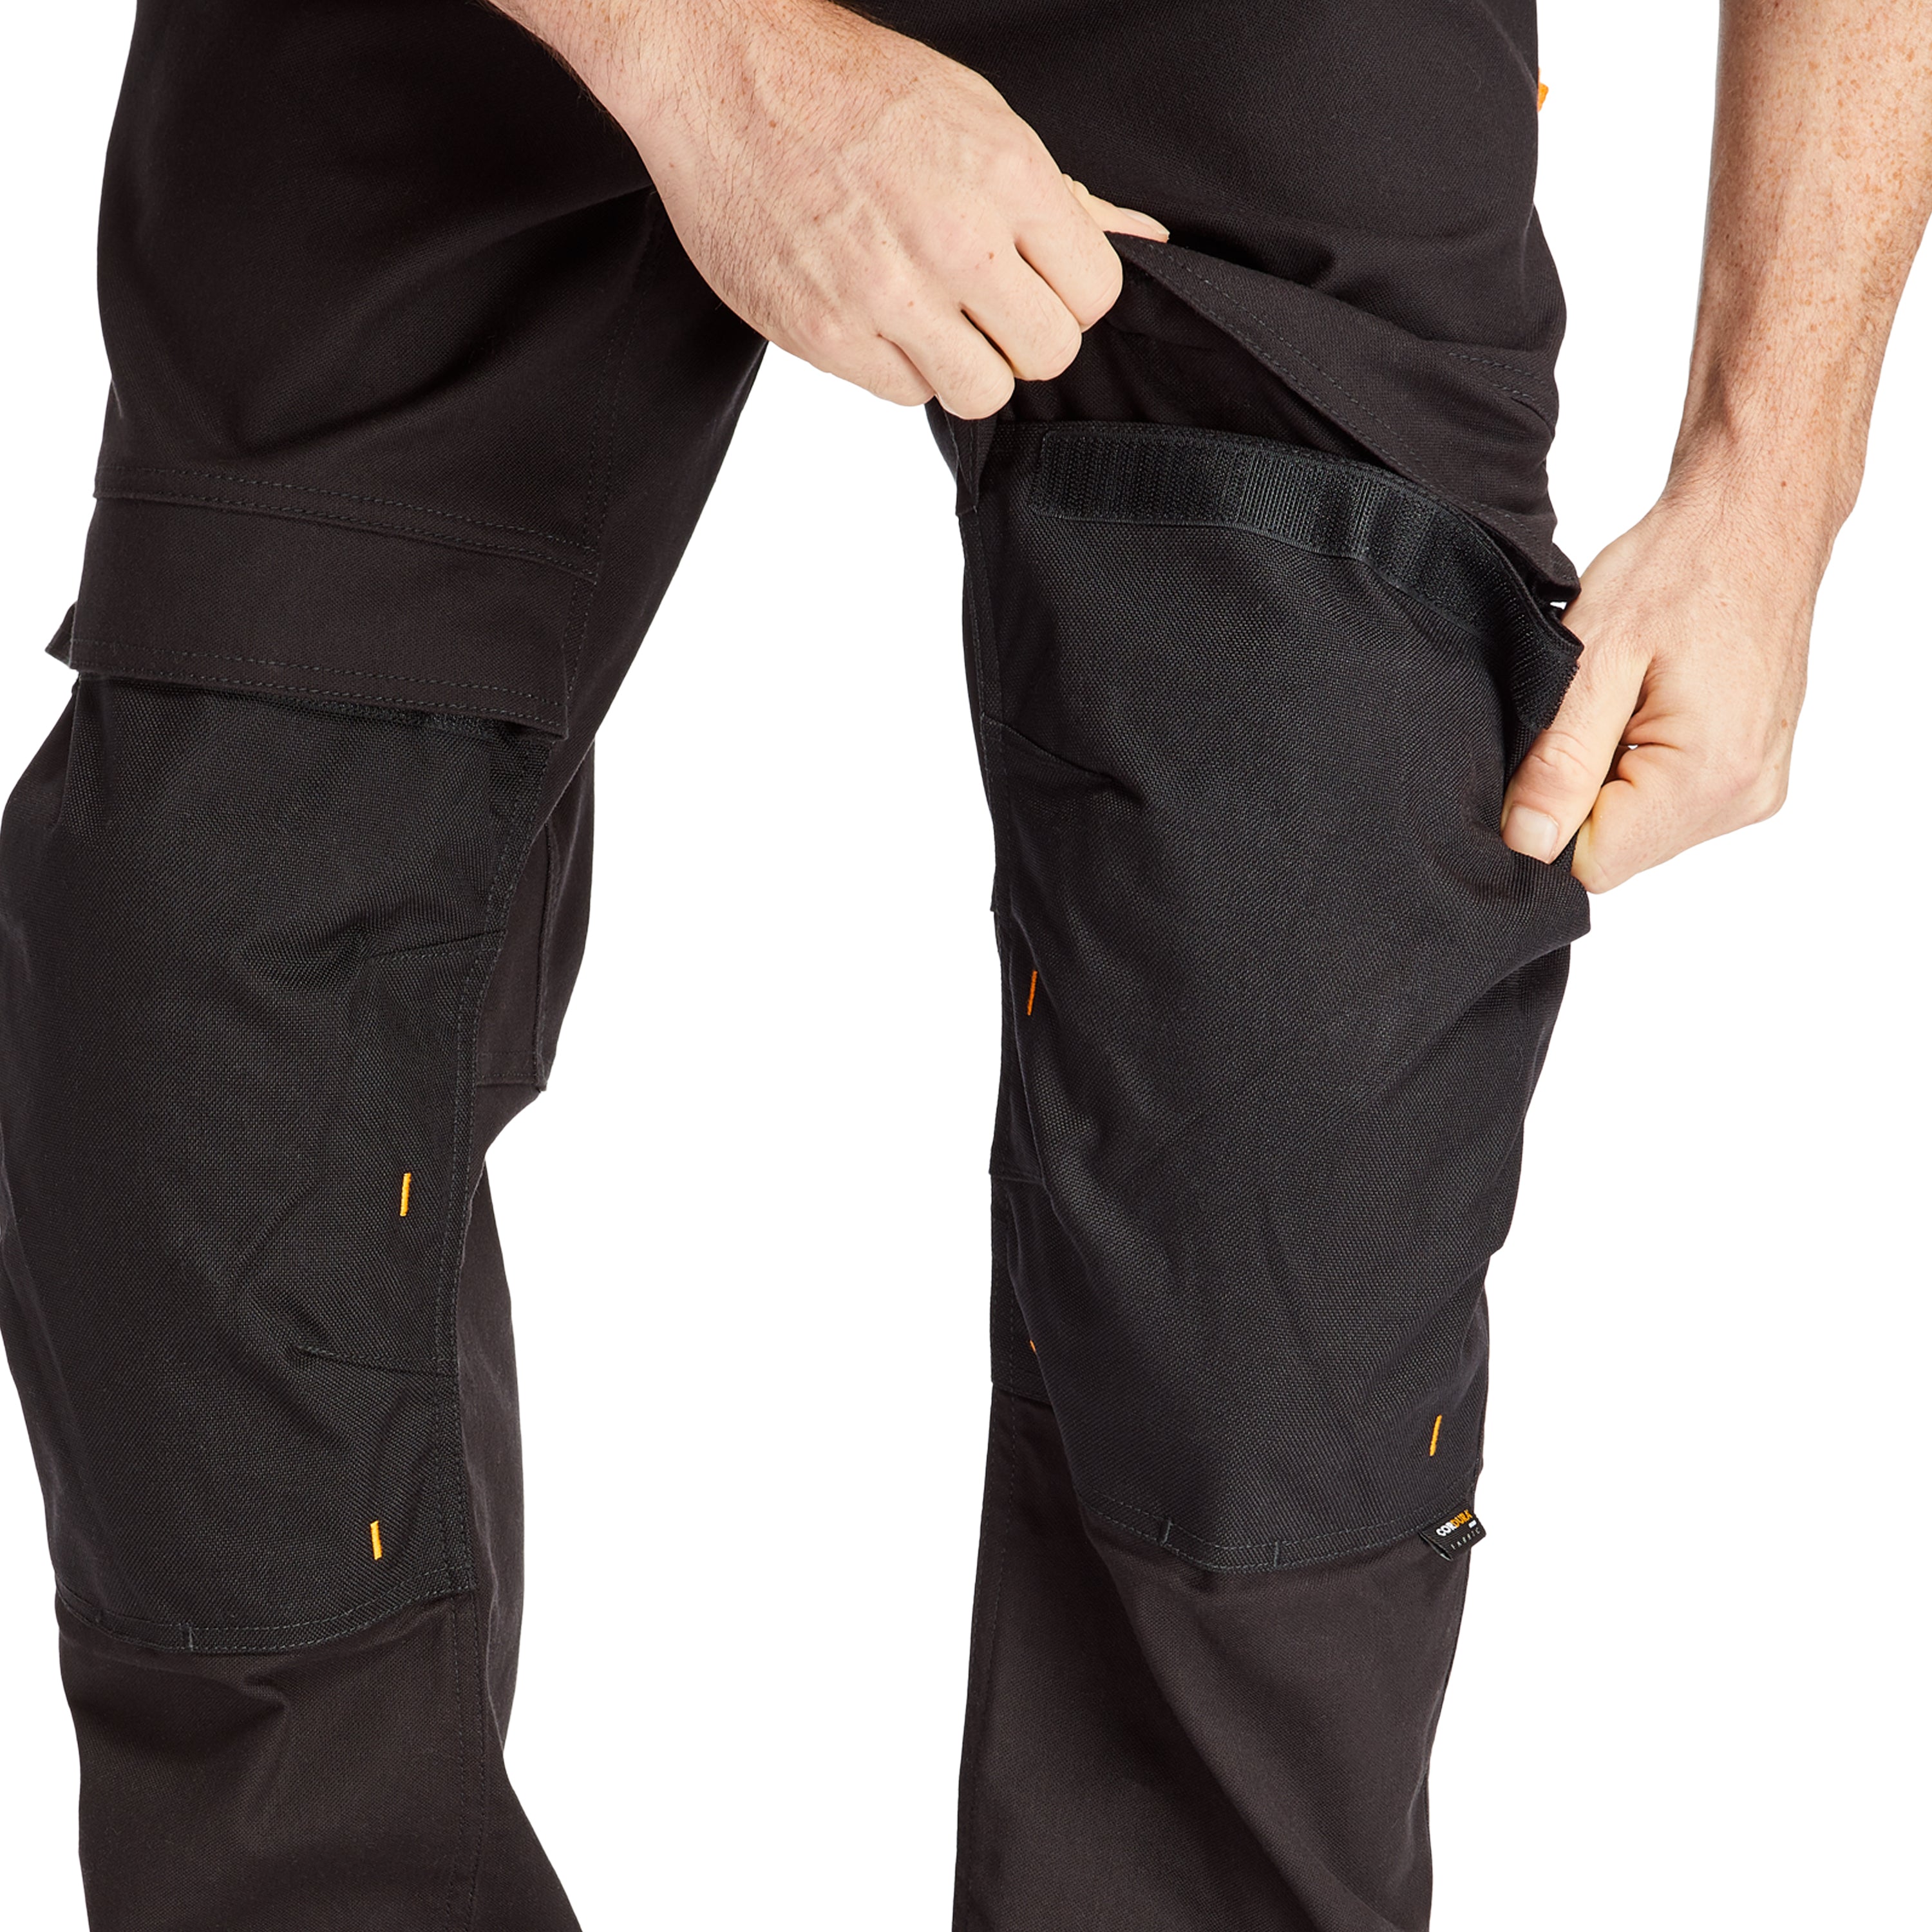 Work pants  A4QTA001  Timberland Pro  waterproof  abrasive resistant   cotton